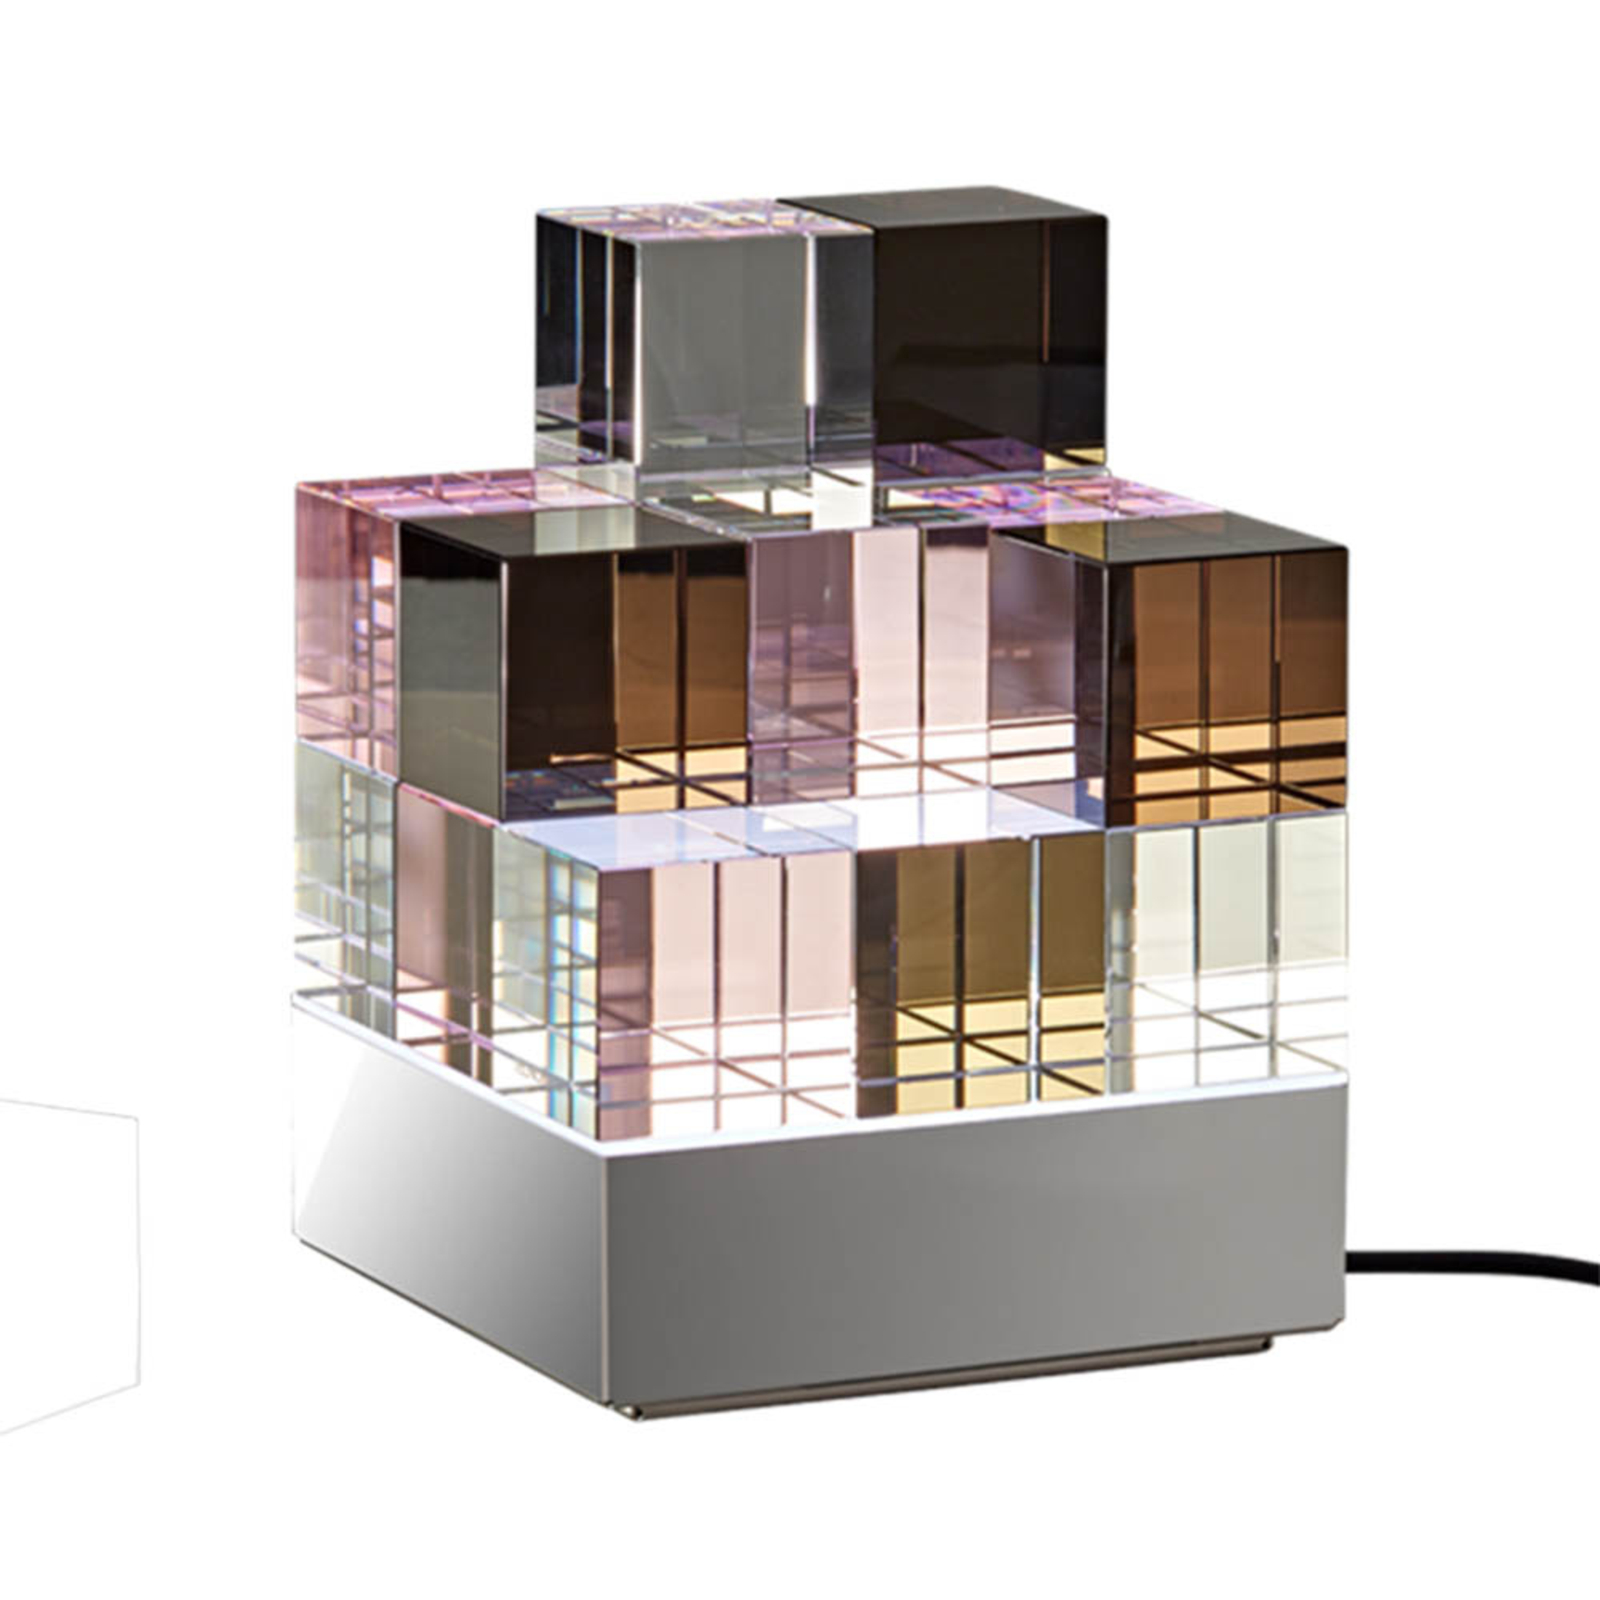 TECNOLUMEN Cubelight Move επιτραπέζιο φωτιστικό, ροζ/μαύρο